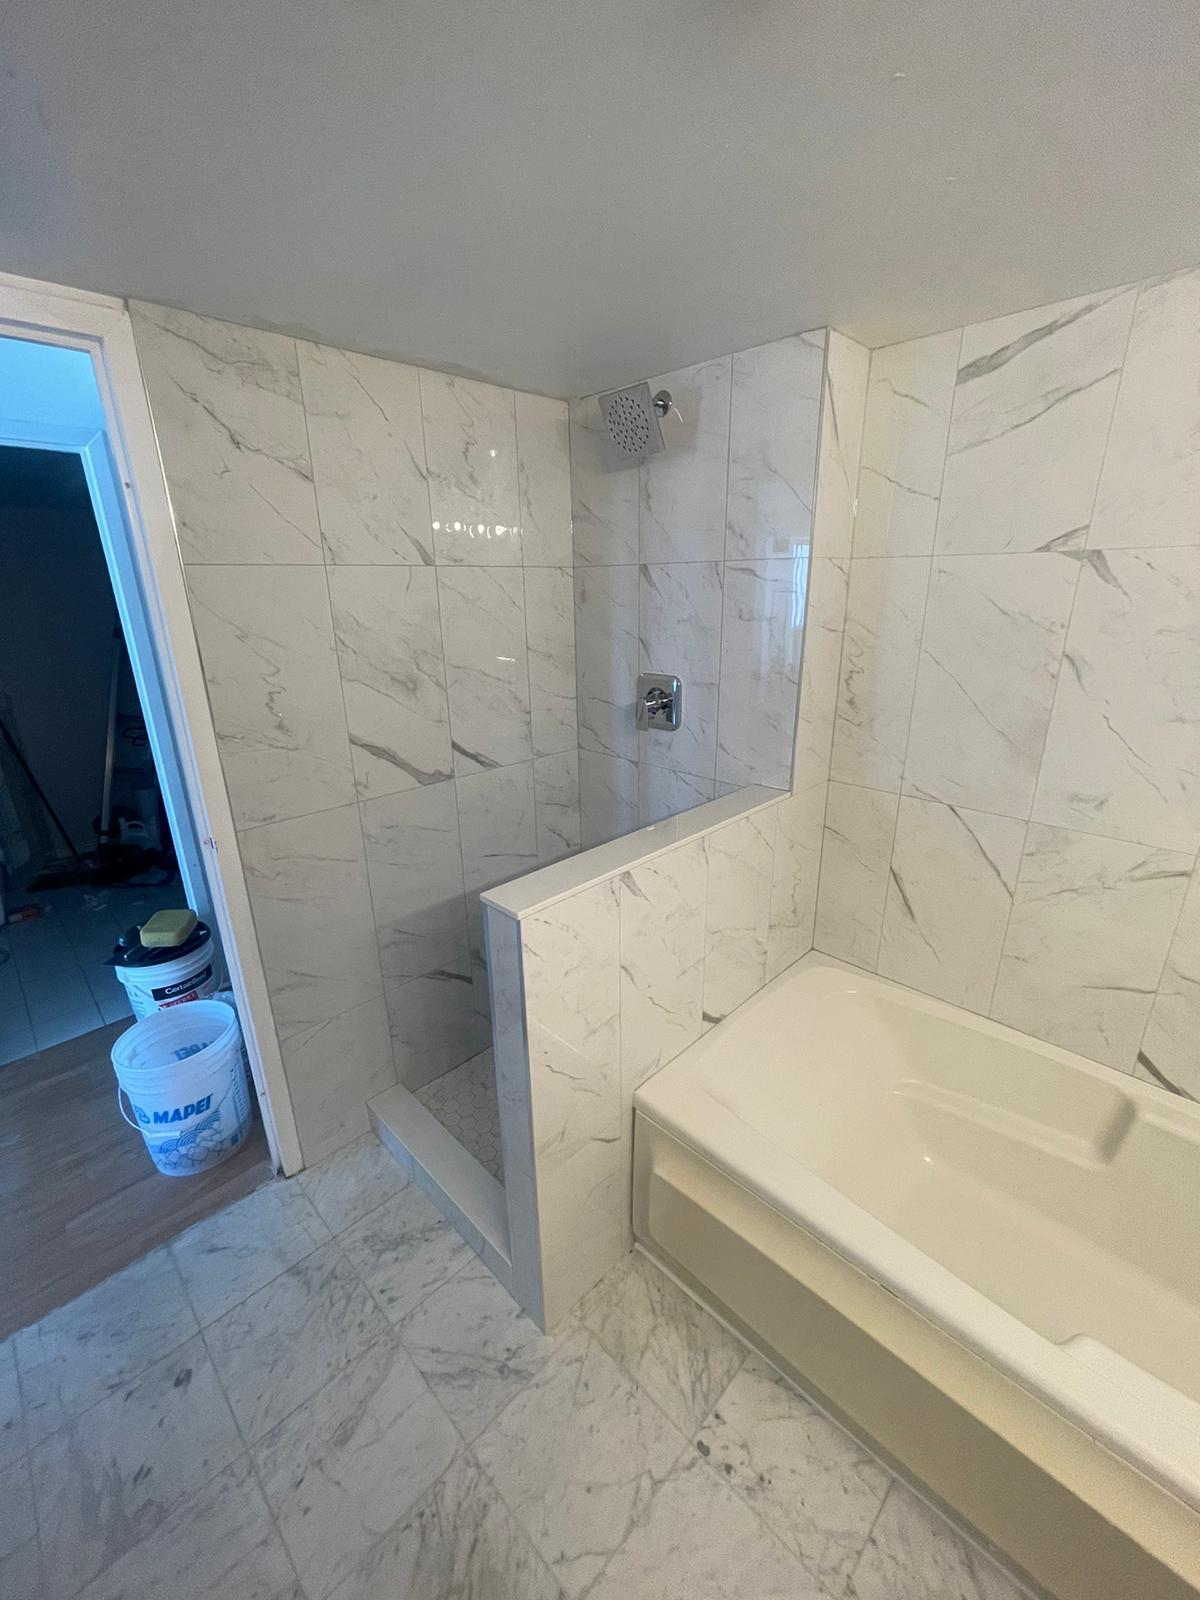 Brampton Bathroom tiles installation at Markom Tiles